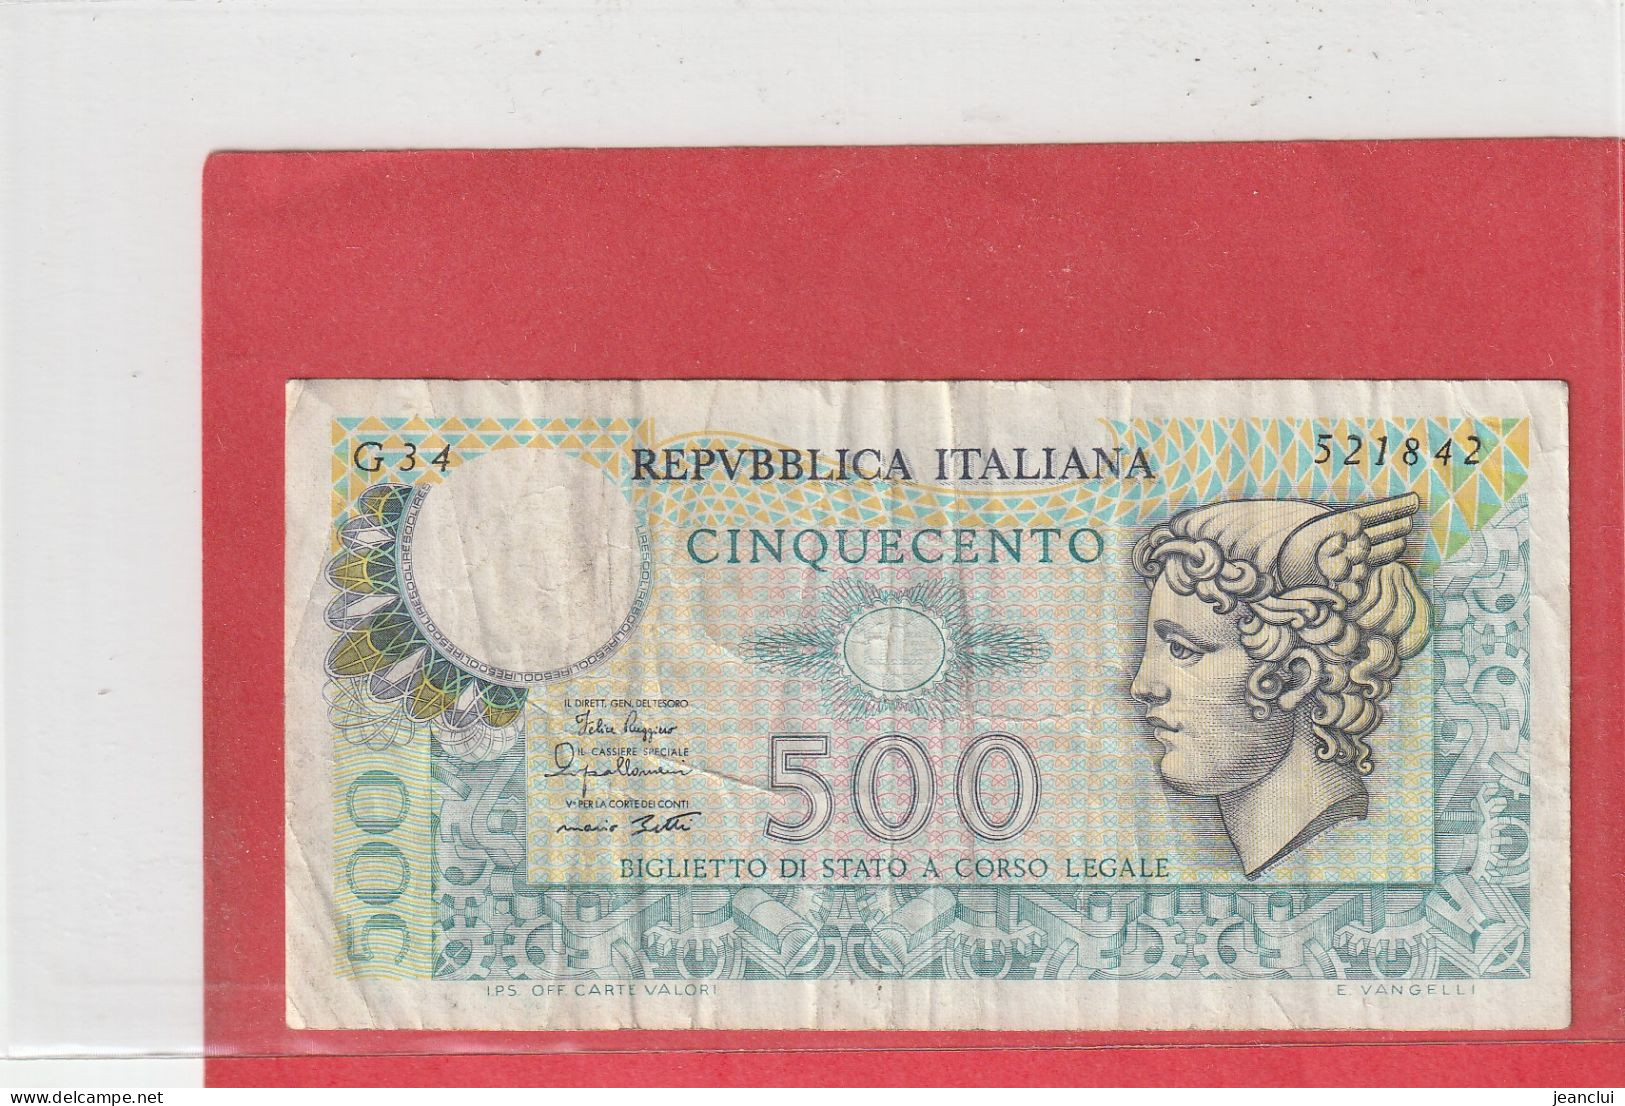 REPUBLICA ITALIANA  .  500 LIRE  .SERIE  G34  N° 521842  .  2 SCANNES  .  BILLET USITE - 500 Lire